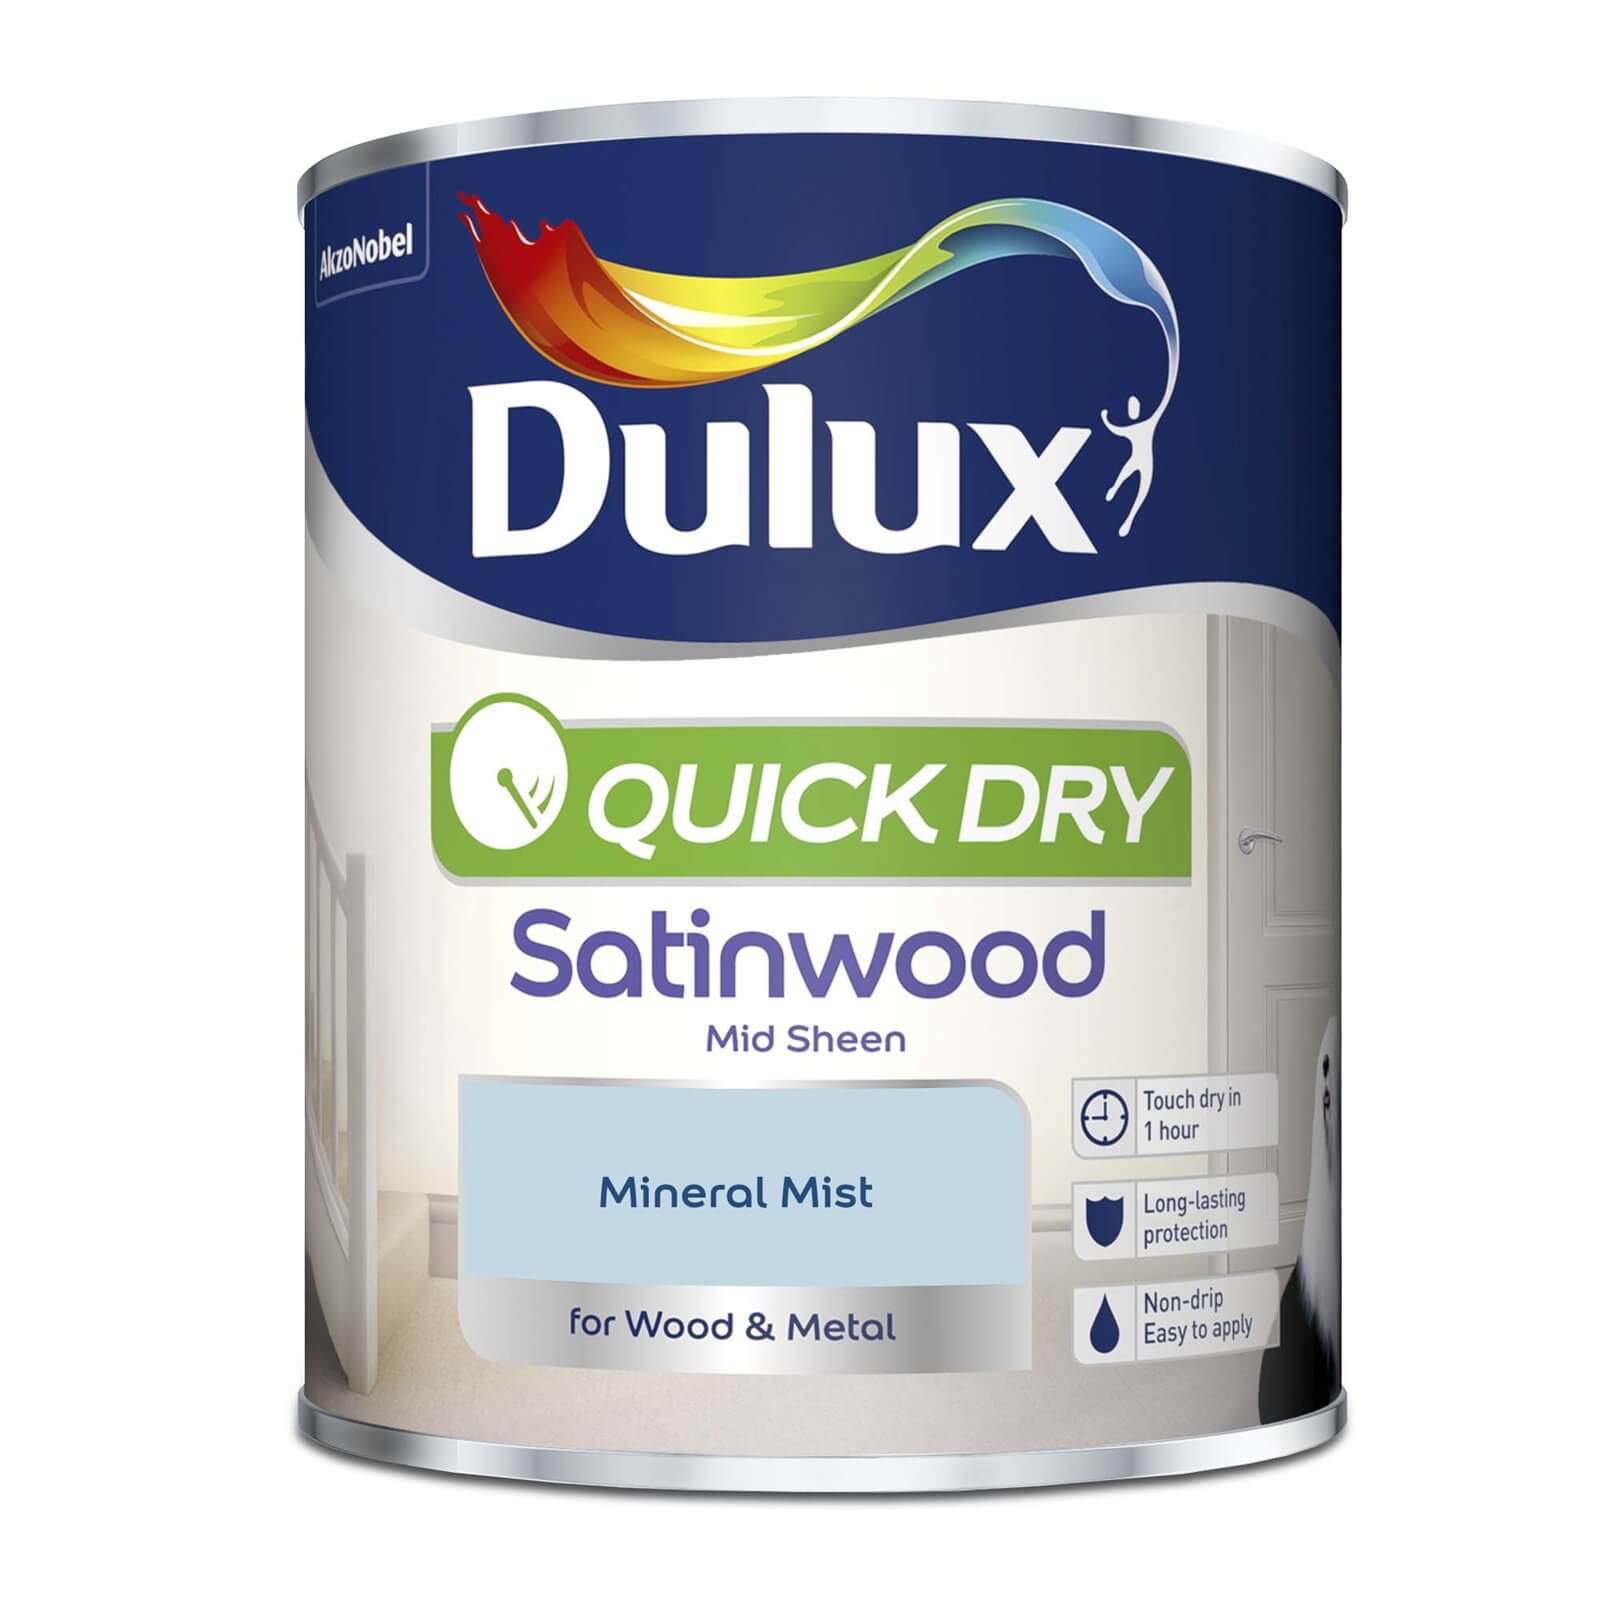 Dulux Quick Dry Satinwood Mineral Mist - 750ml